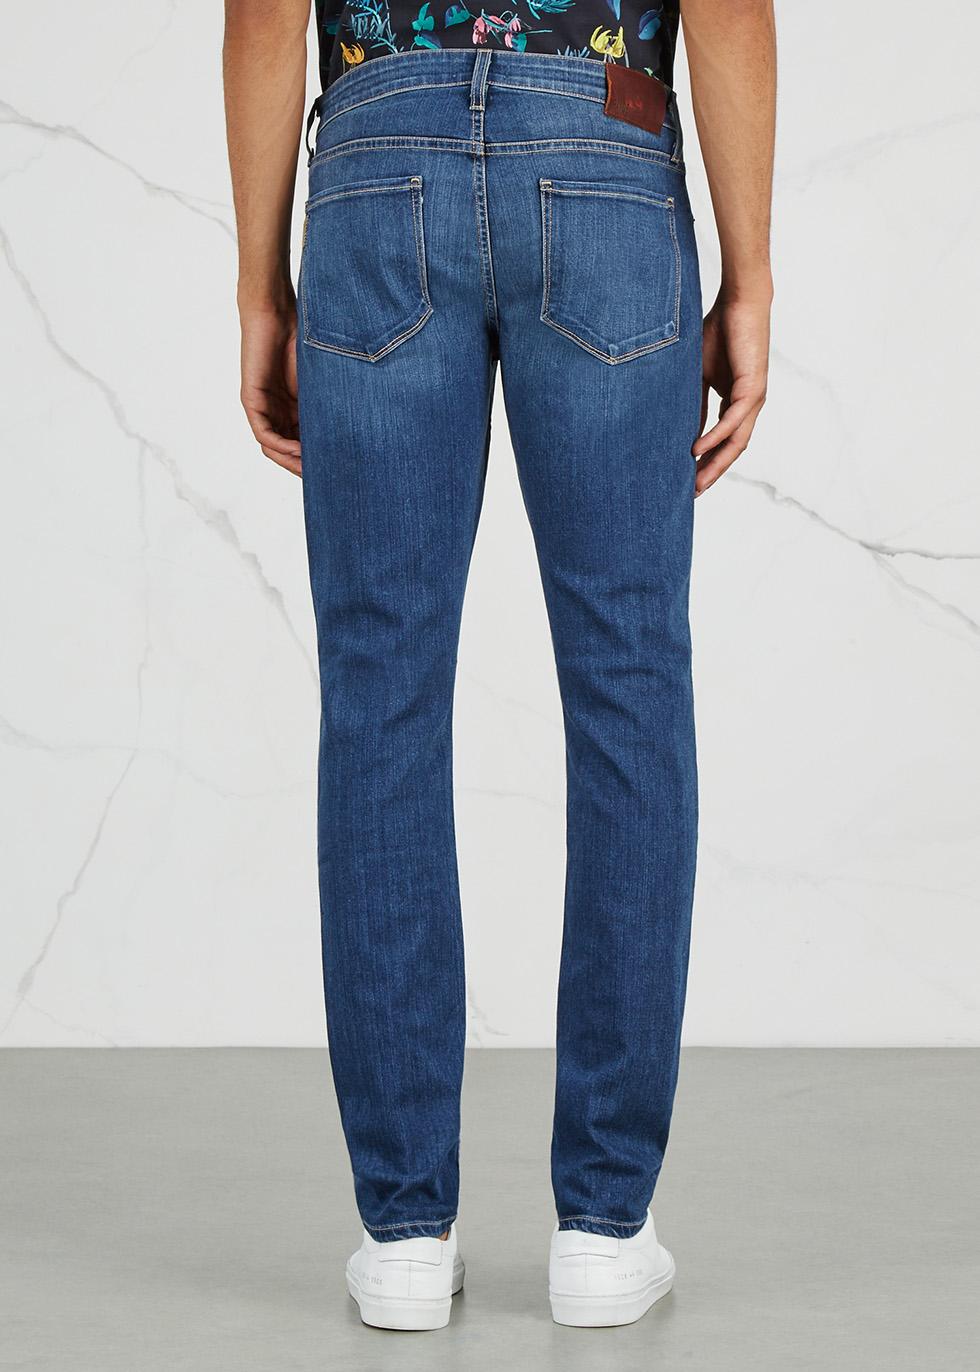 PAIGE Denim Croft Blue Skinny Jeans for Men - Lyst